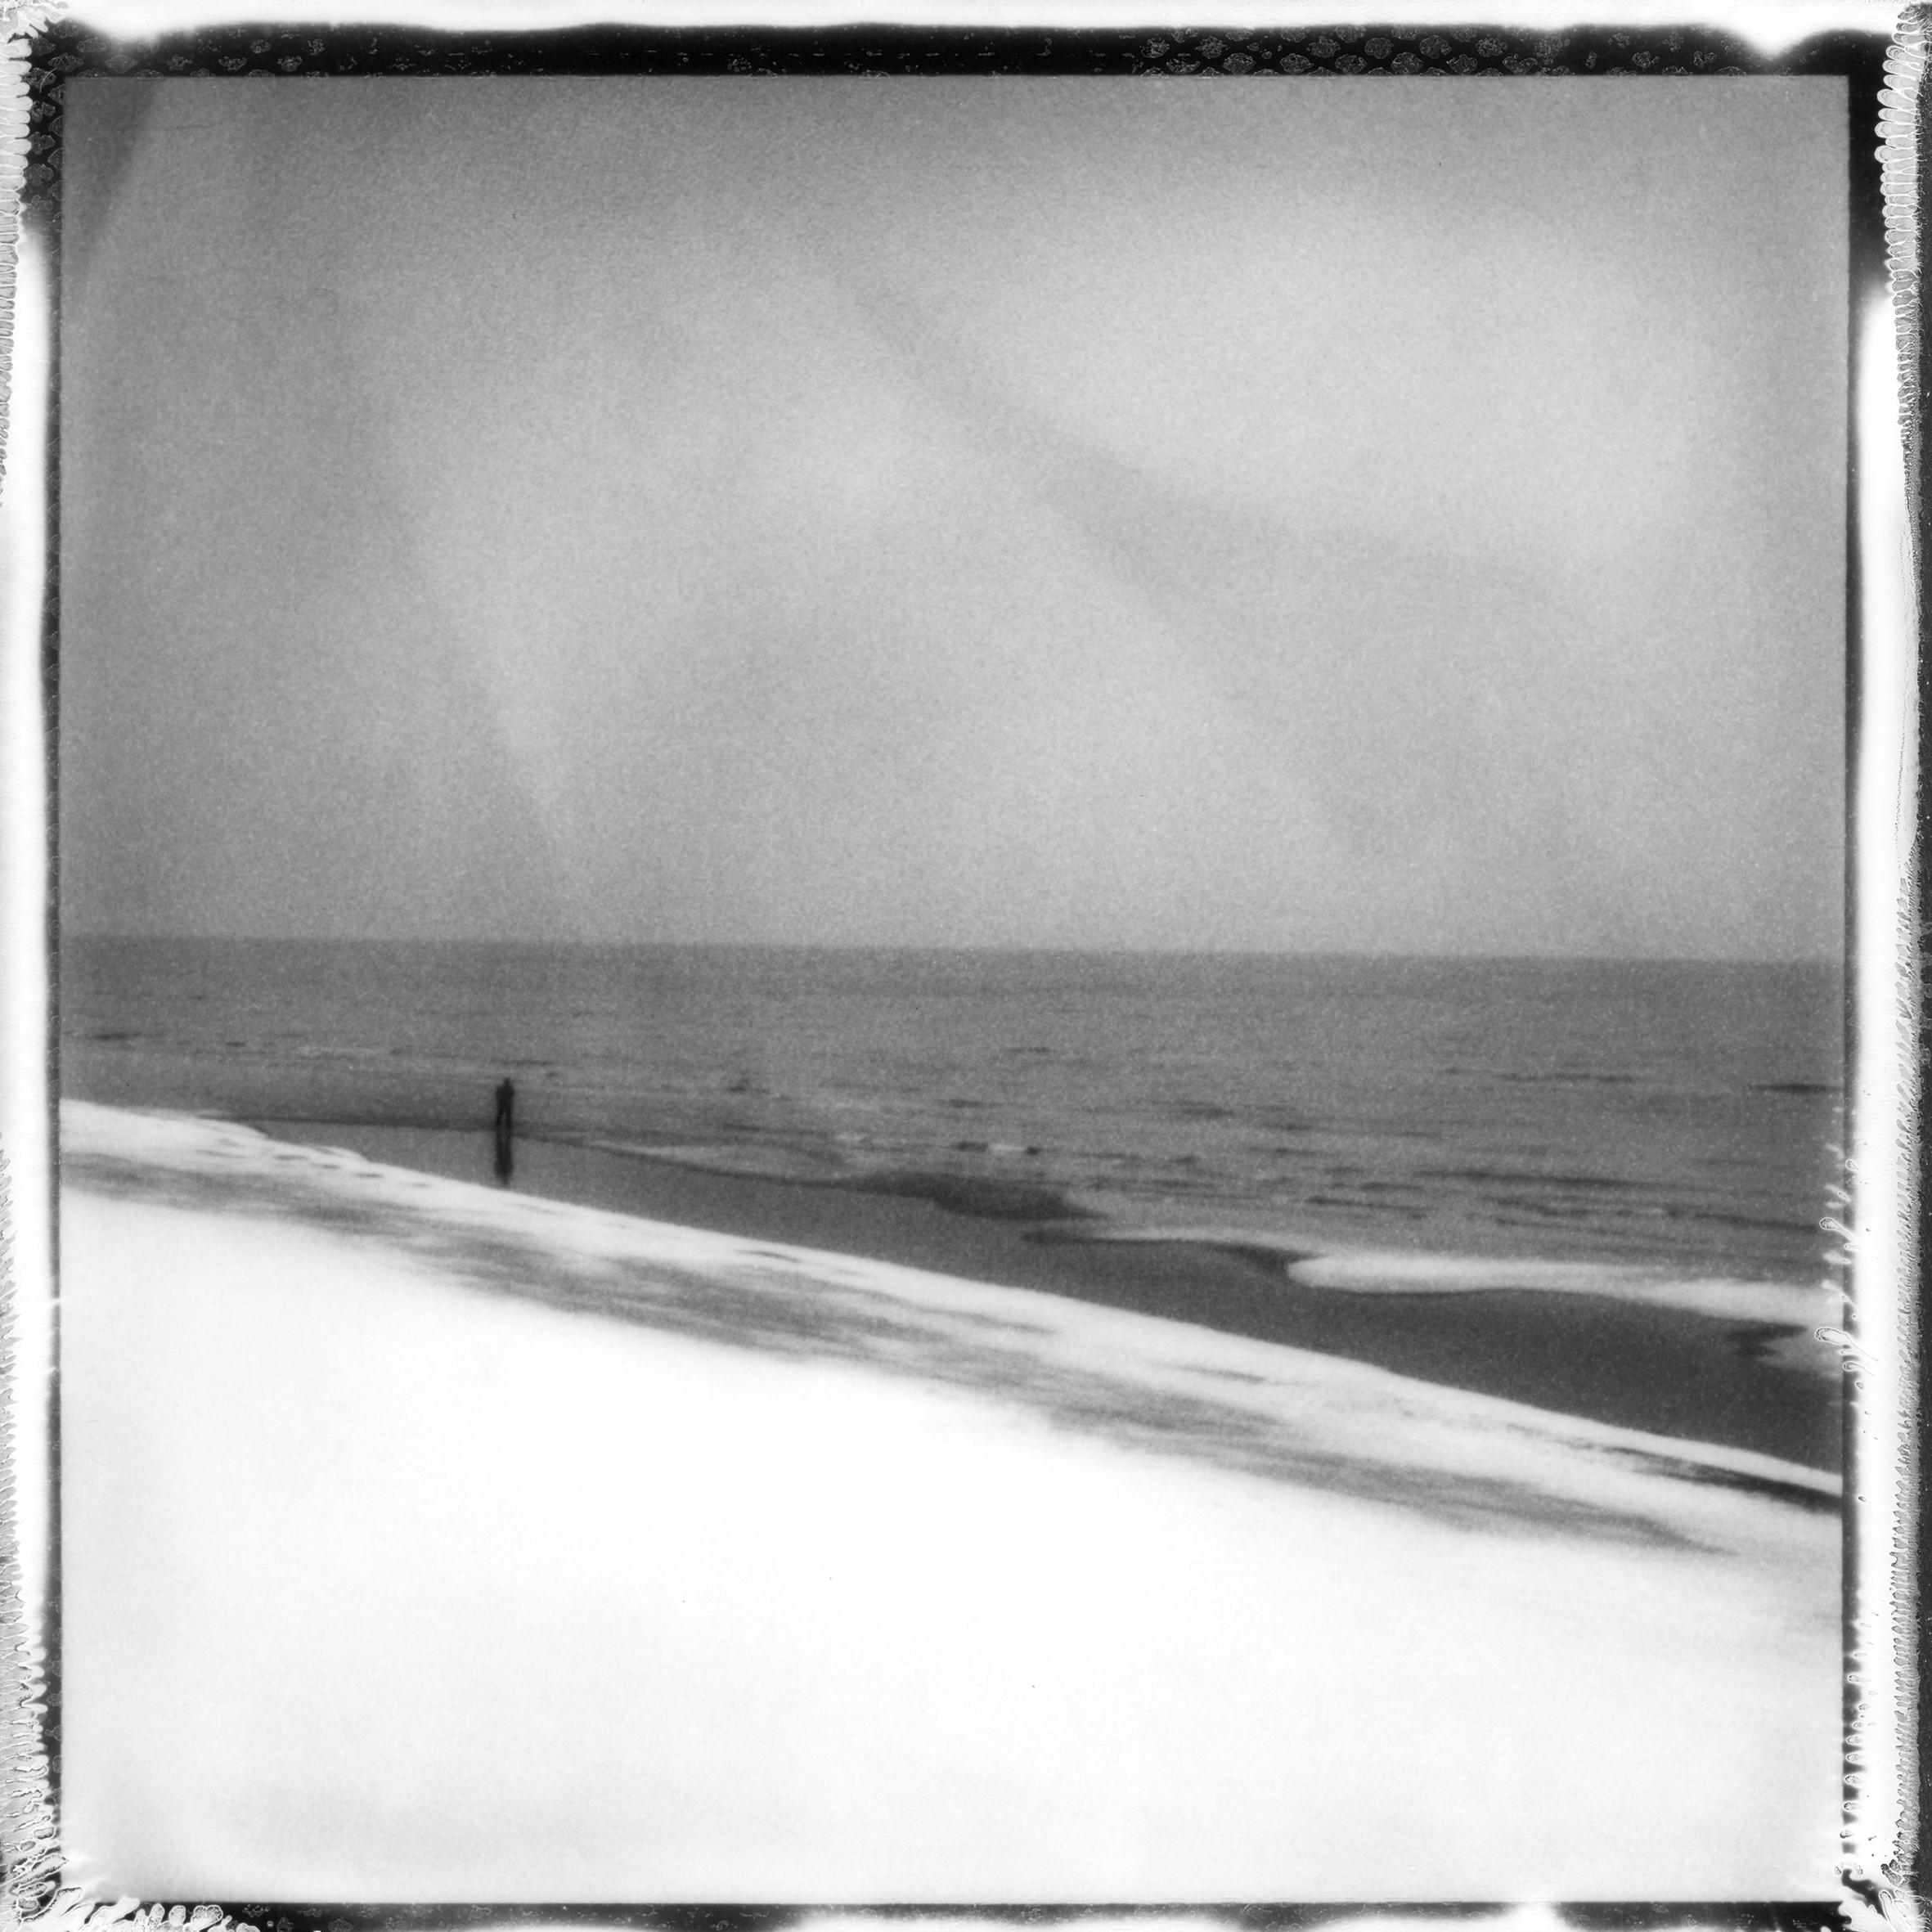 Ugne Pouwell Landscape Photograph - 'Frozen beach #6' - black and white analogue landscape photography